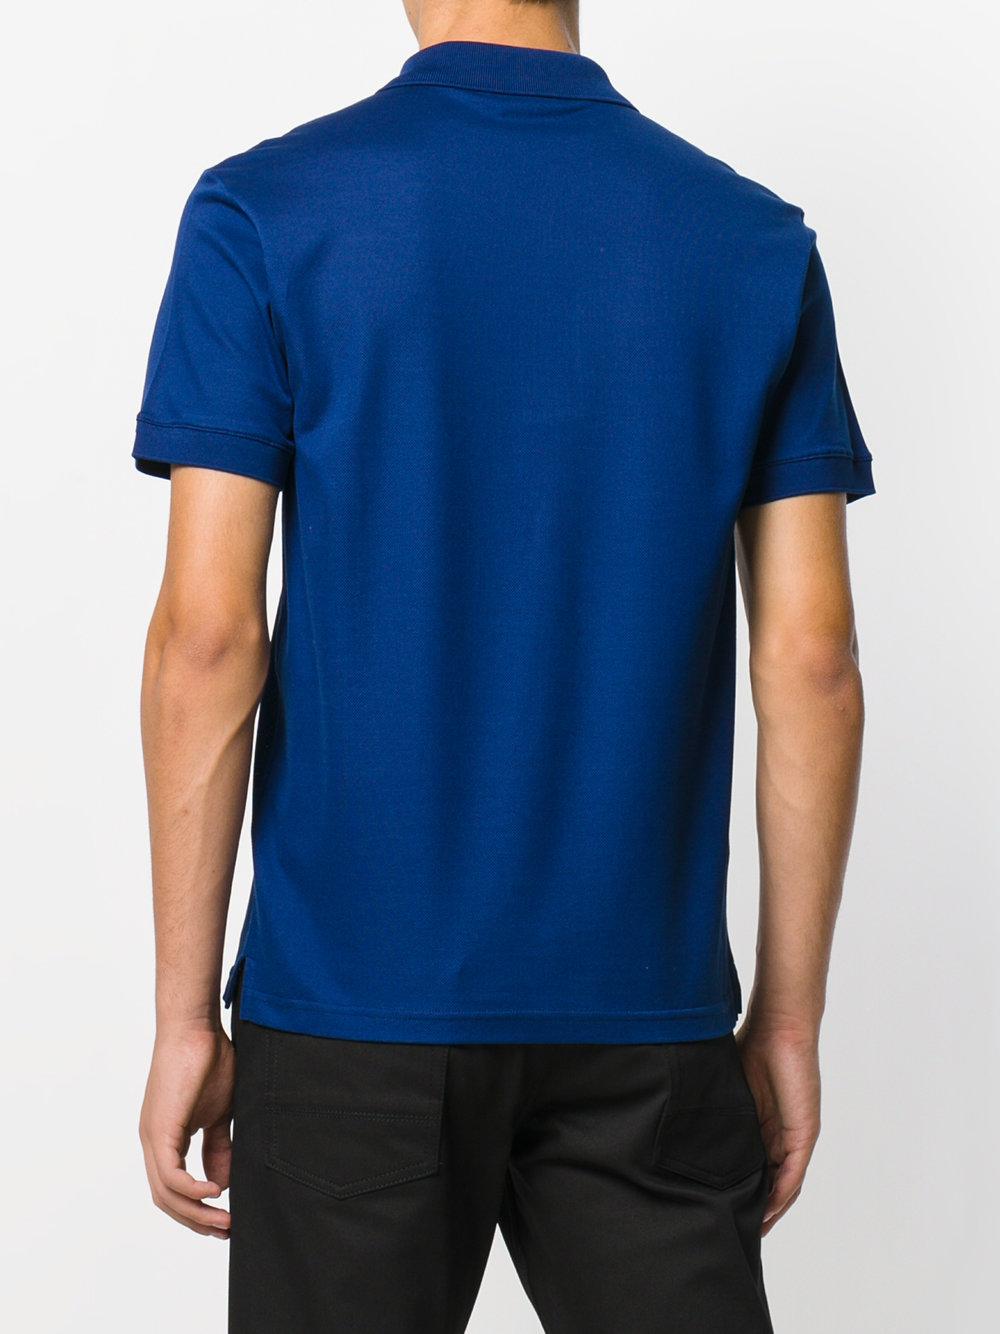 Alexander McQueen Cotton Peacock Feather Polo Shirt in Blue for Men - Lyst